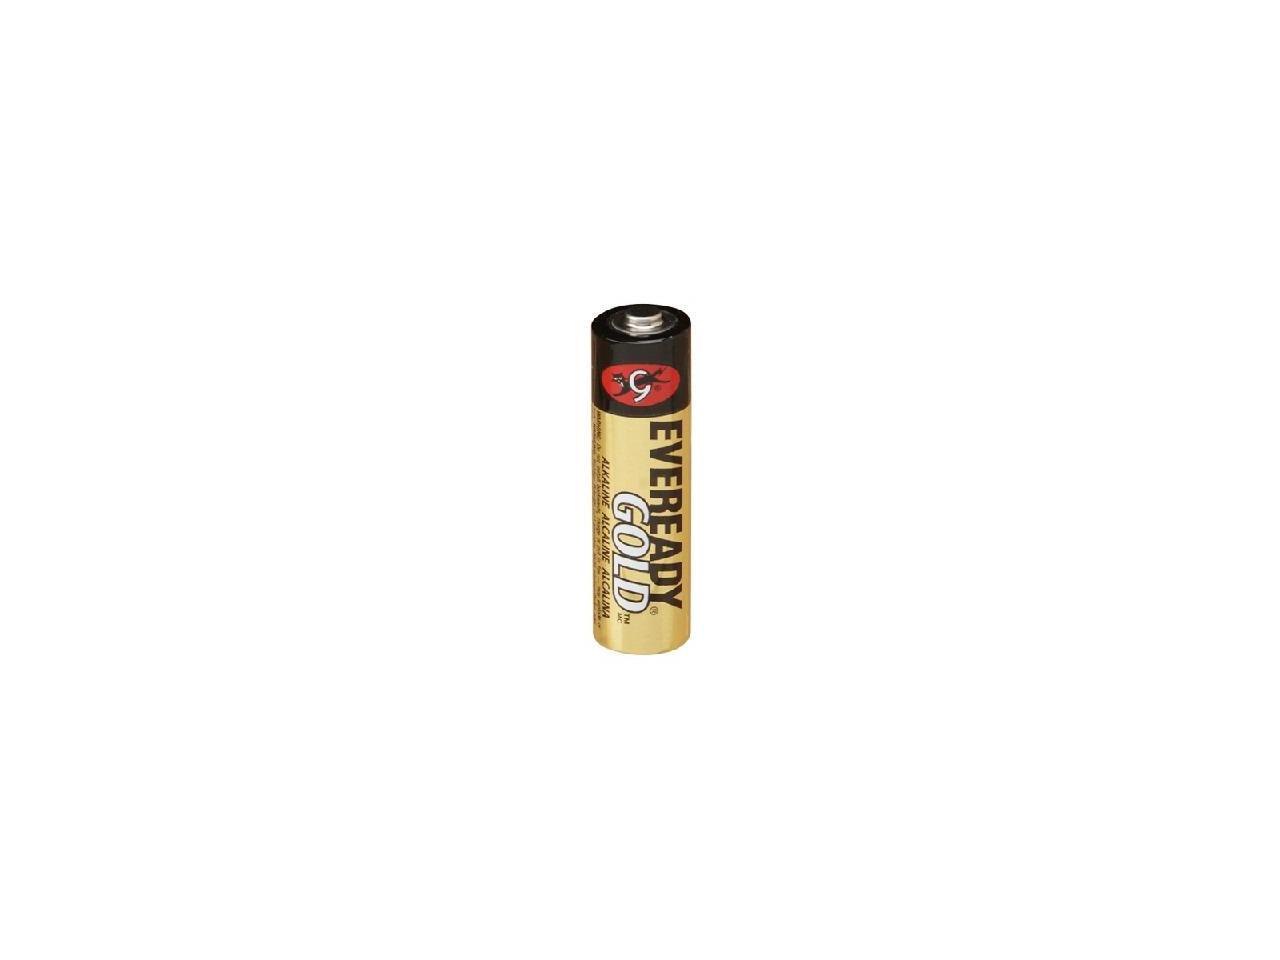 ENERGIZER Eveready Gold 1.5V AA Alkaline Battery, 8-pack